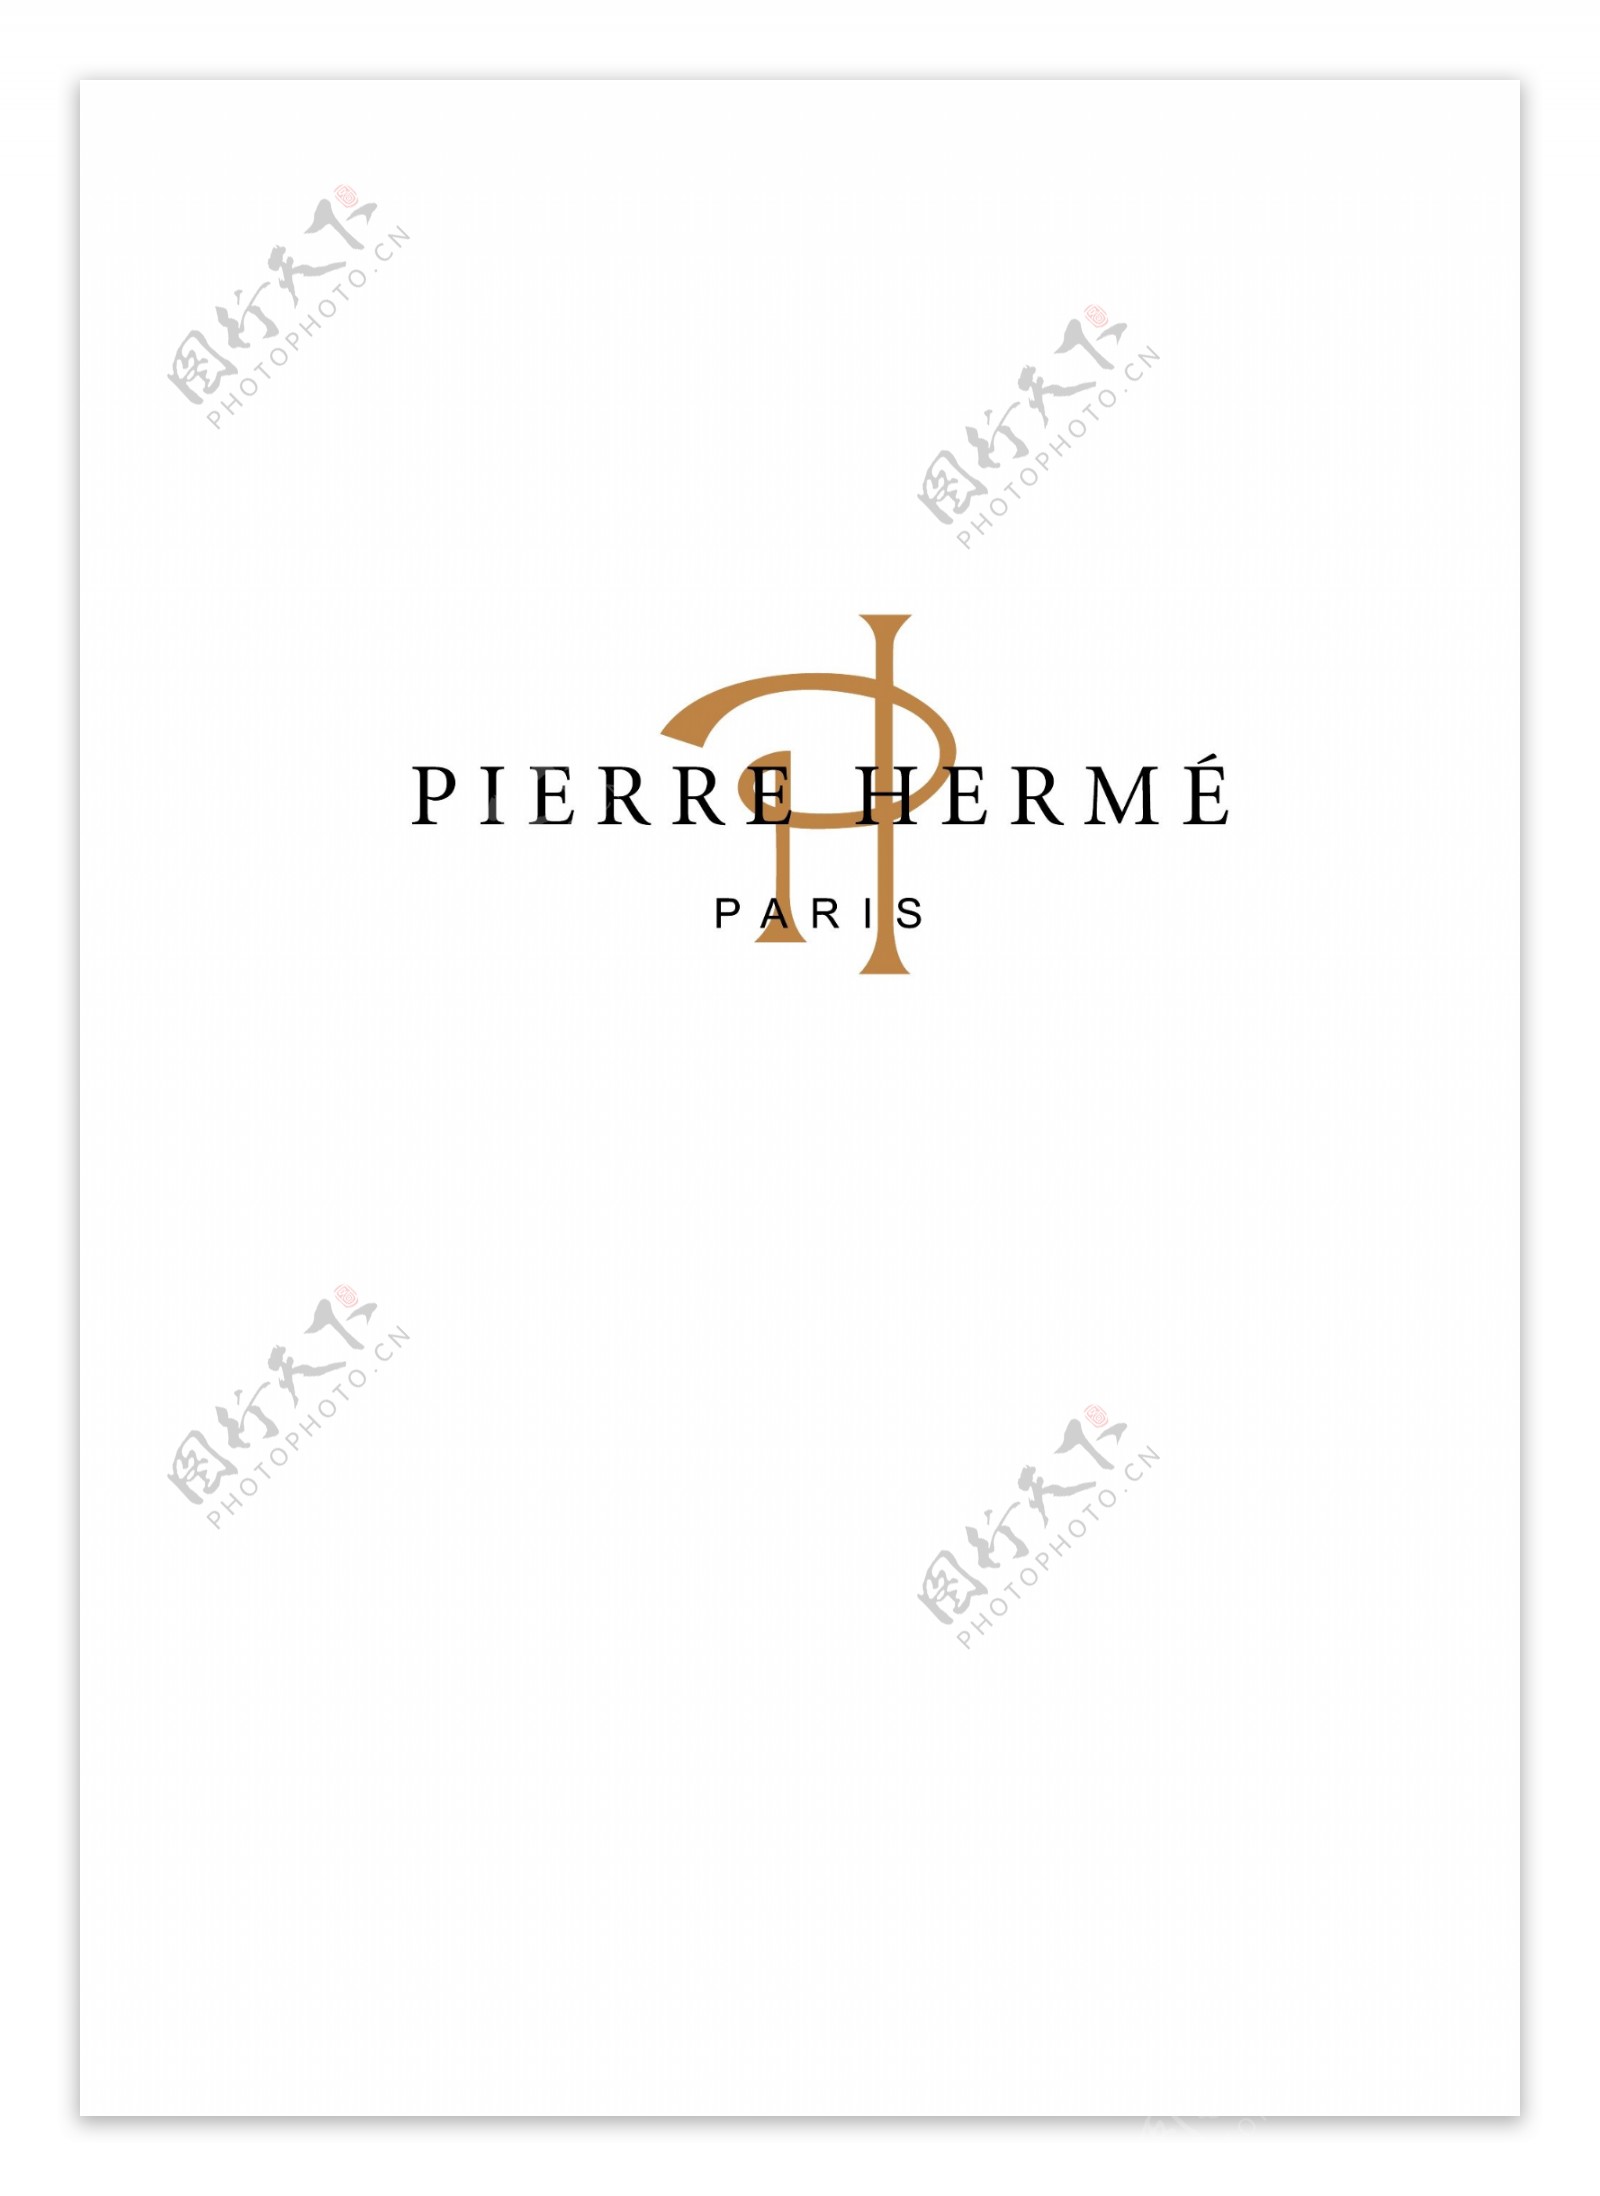 PierreHermand233parislogo设计欣赏PierreHermand233paris饮料品牌LOGO下载标志设计欣赏